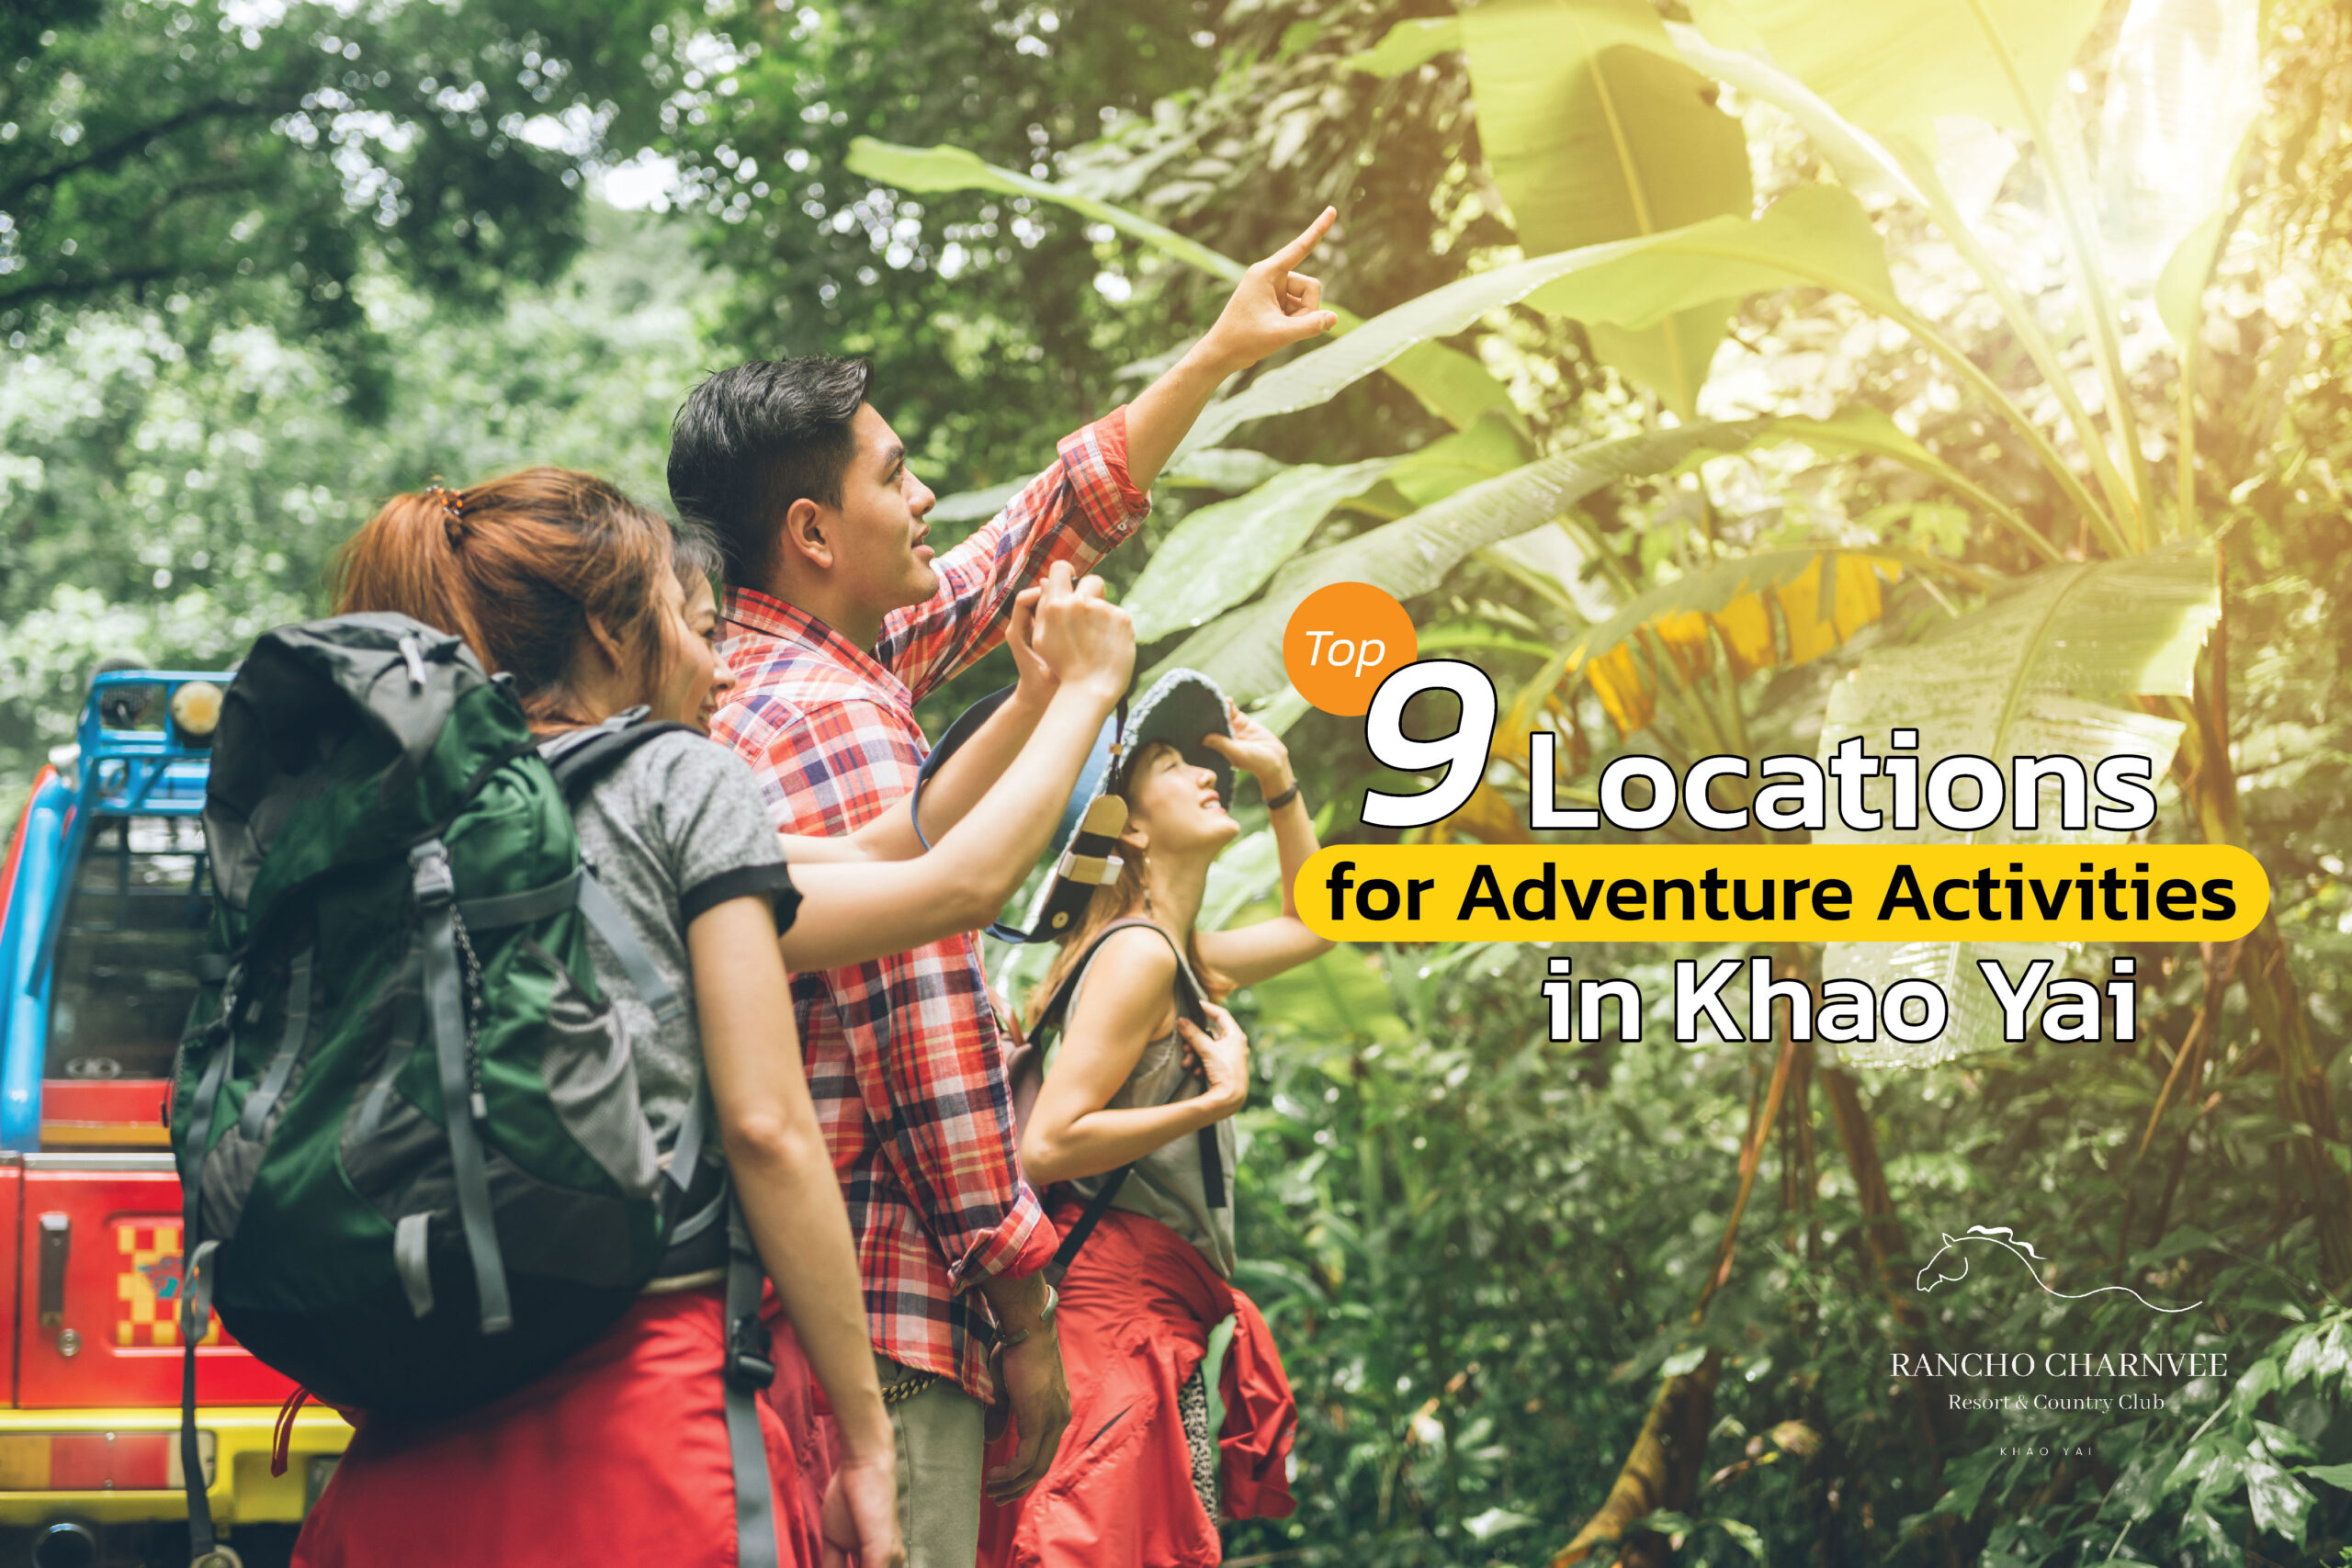 Top 9 Locations for Adventure Activities in Khao Yai